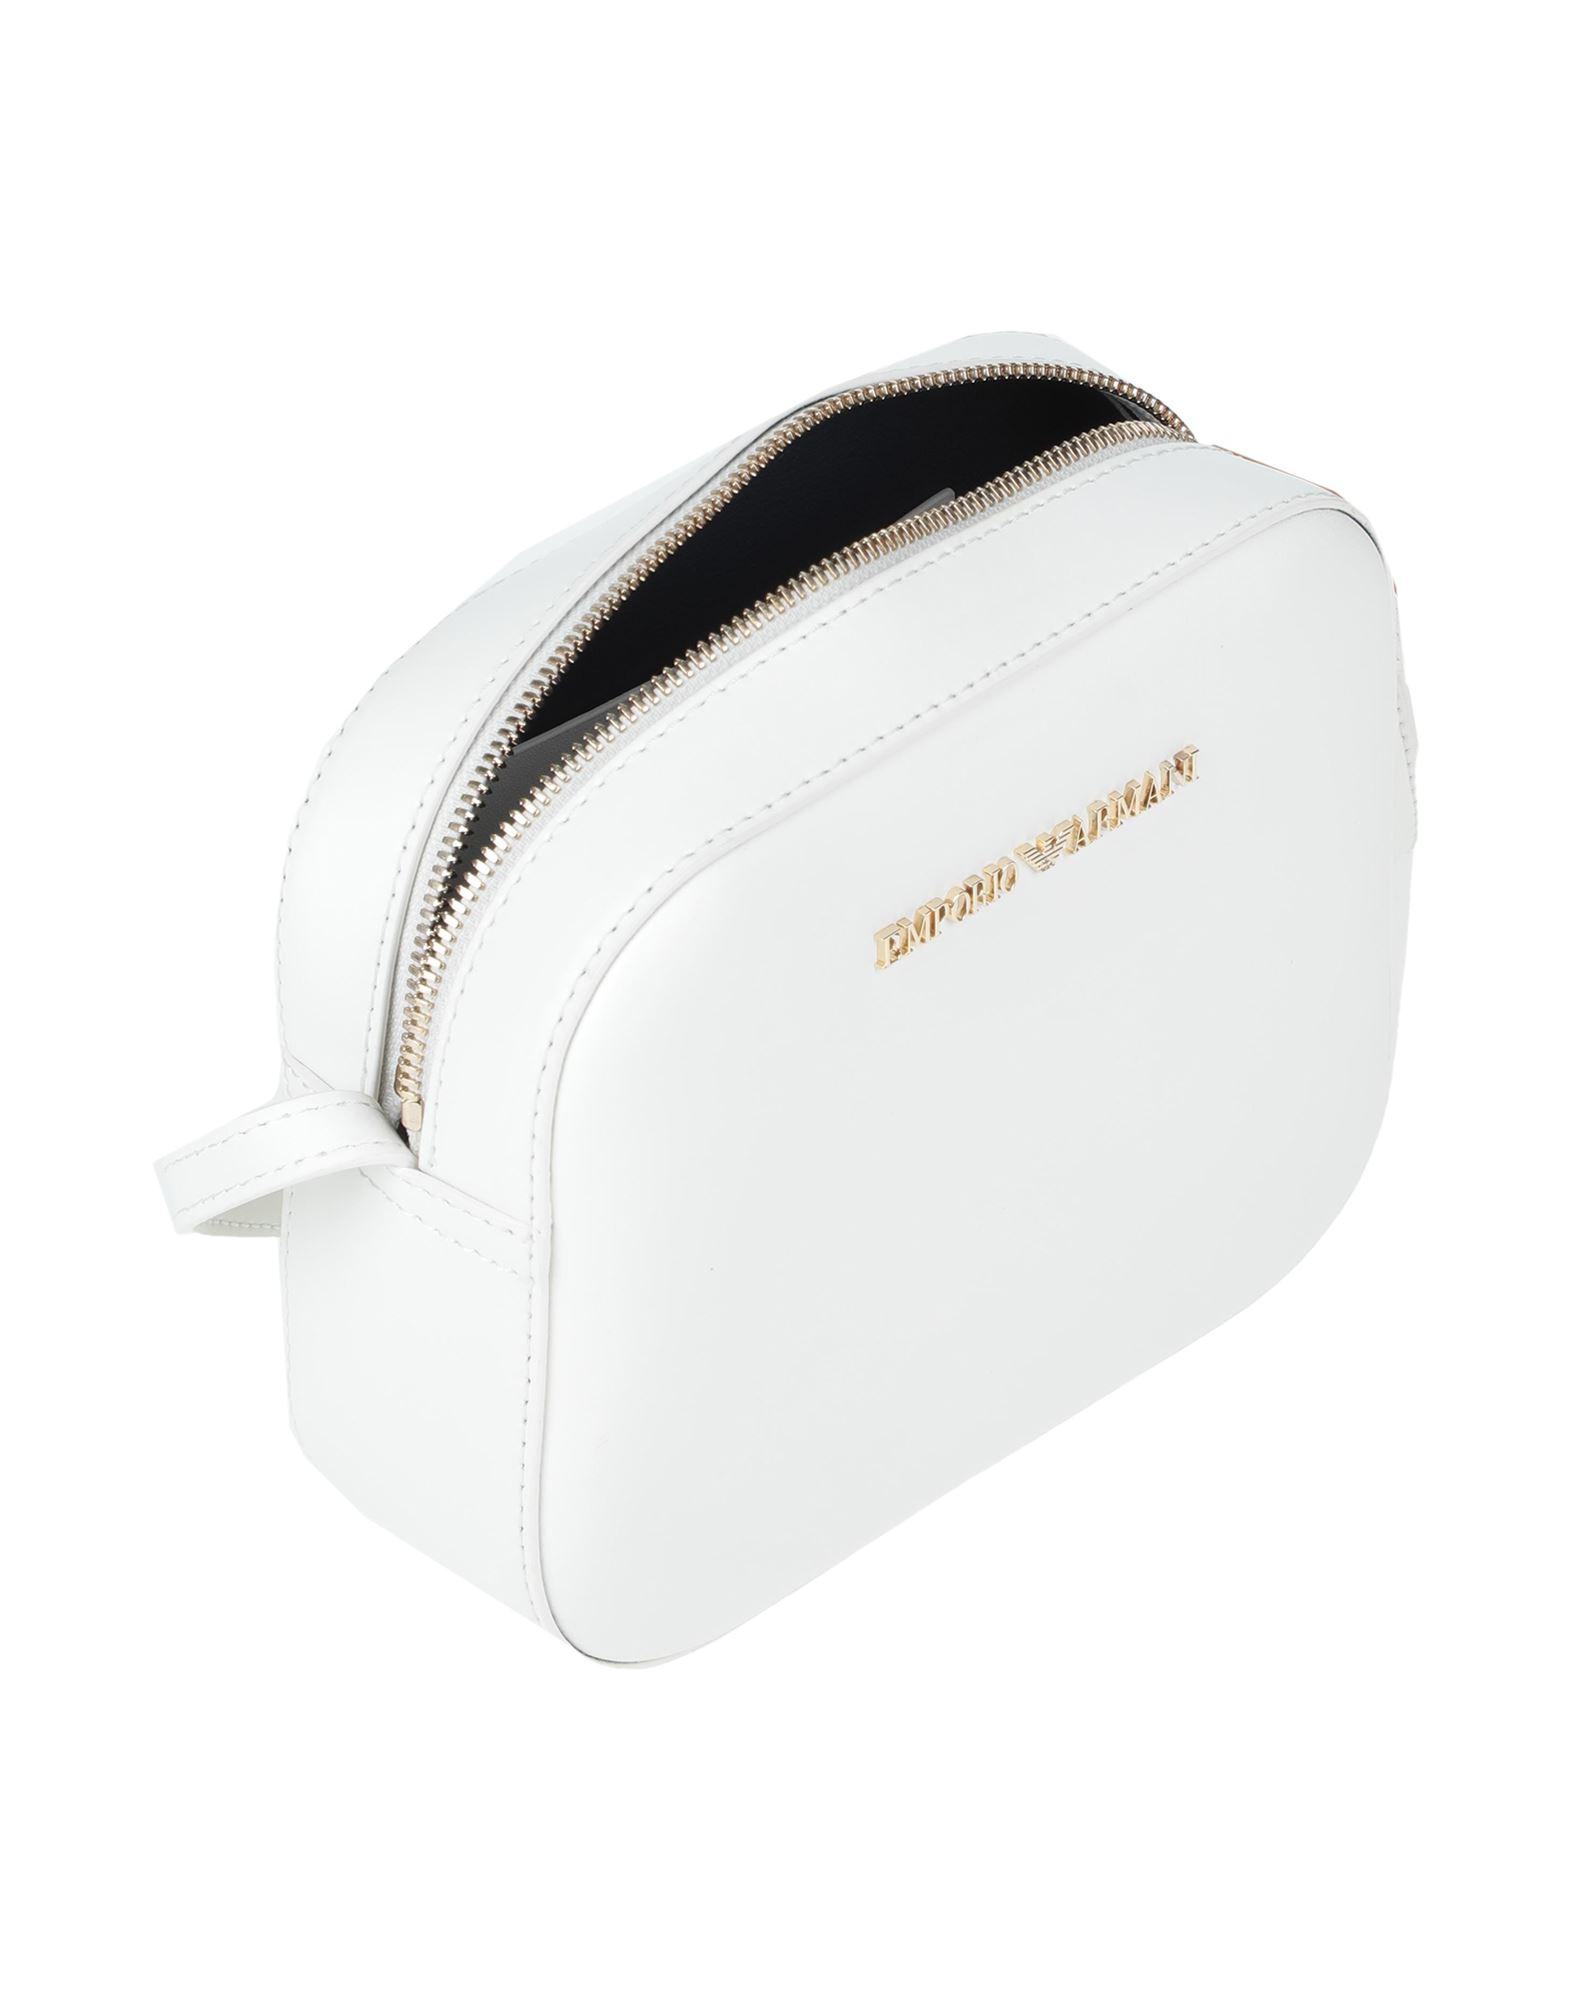 Emporio Armani Leather Cross-body Bag in White | Lyst